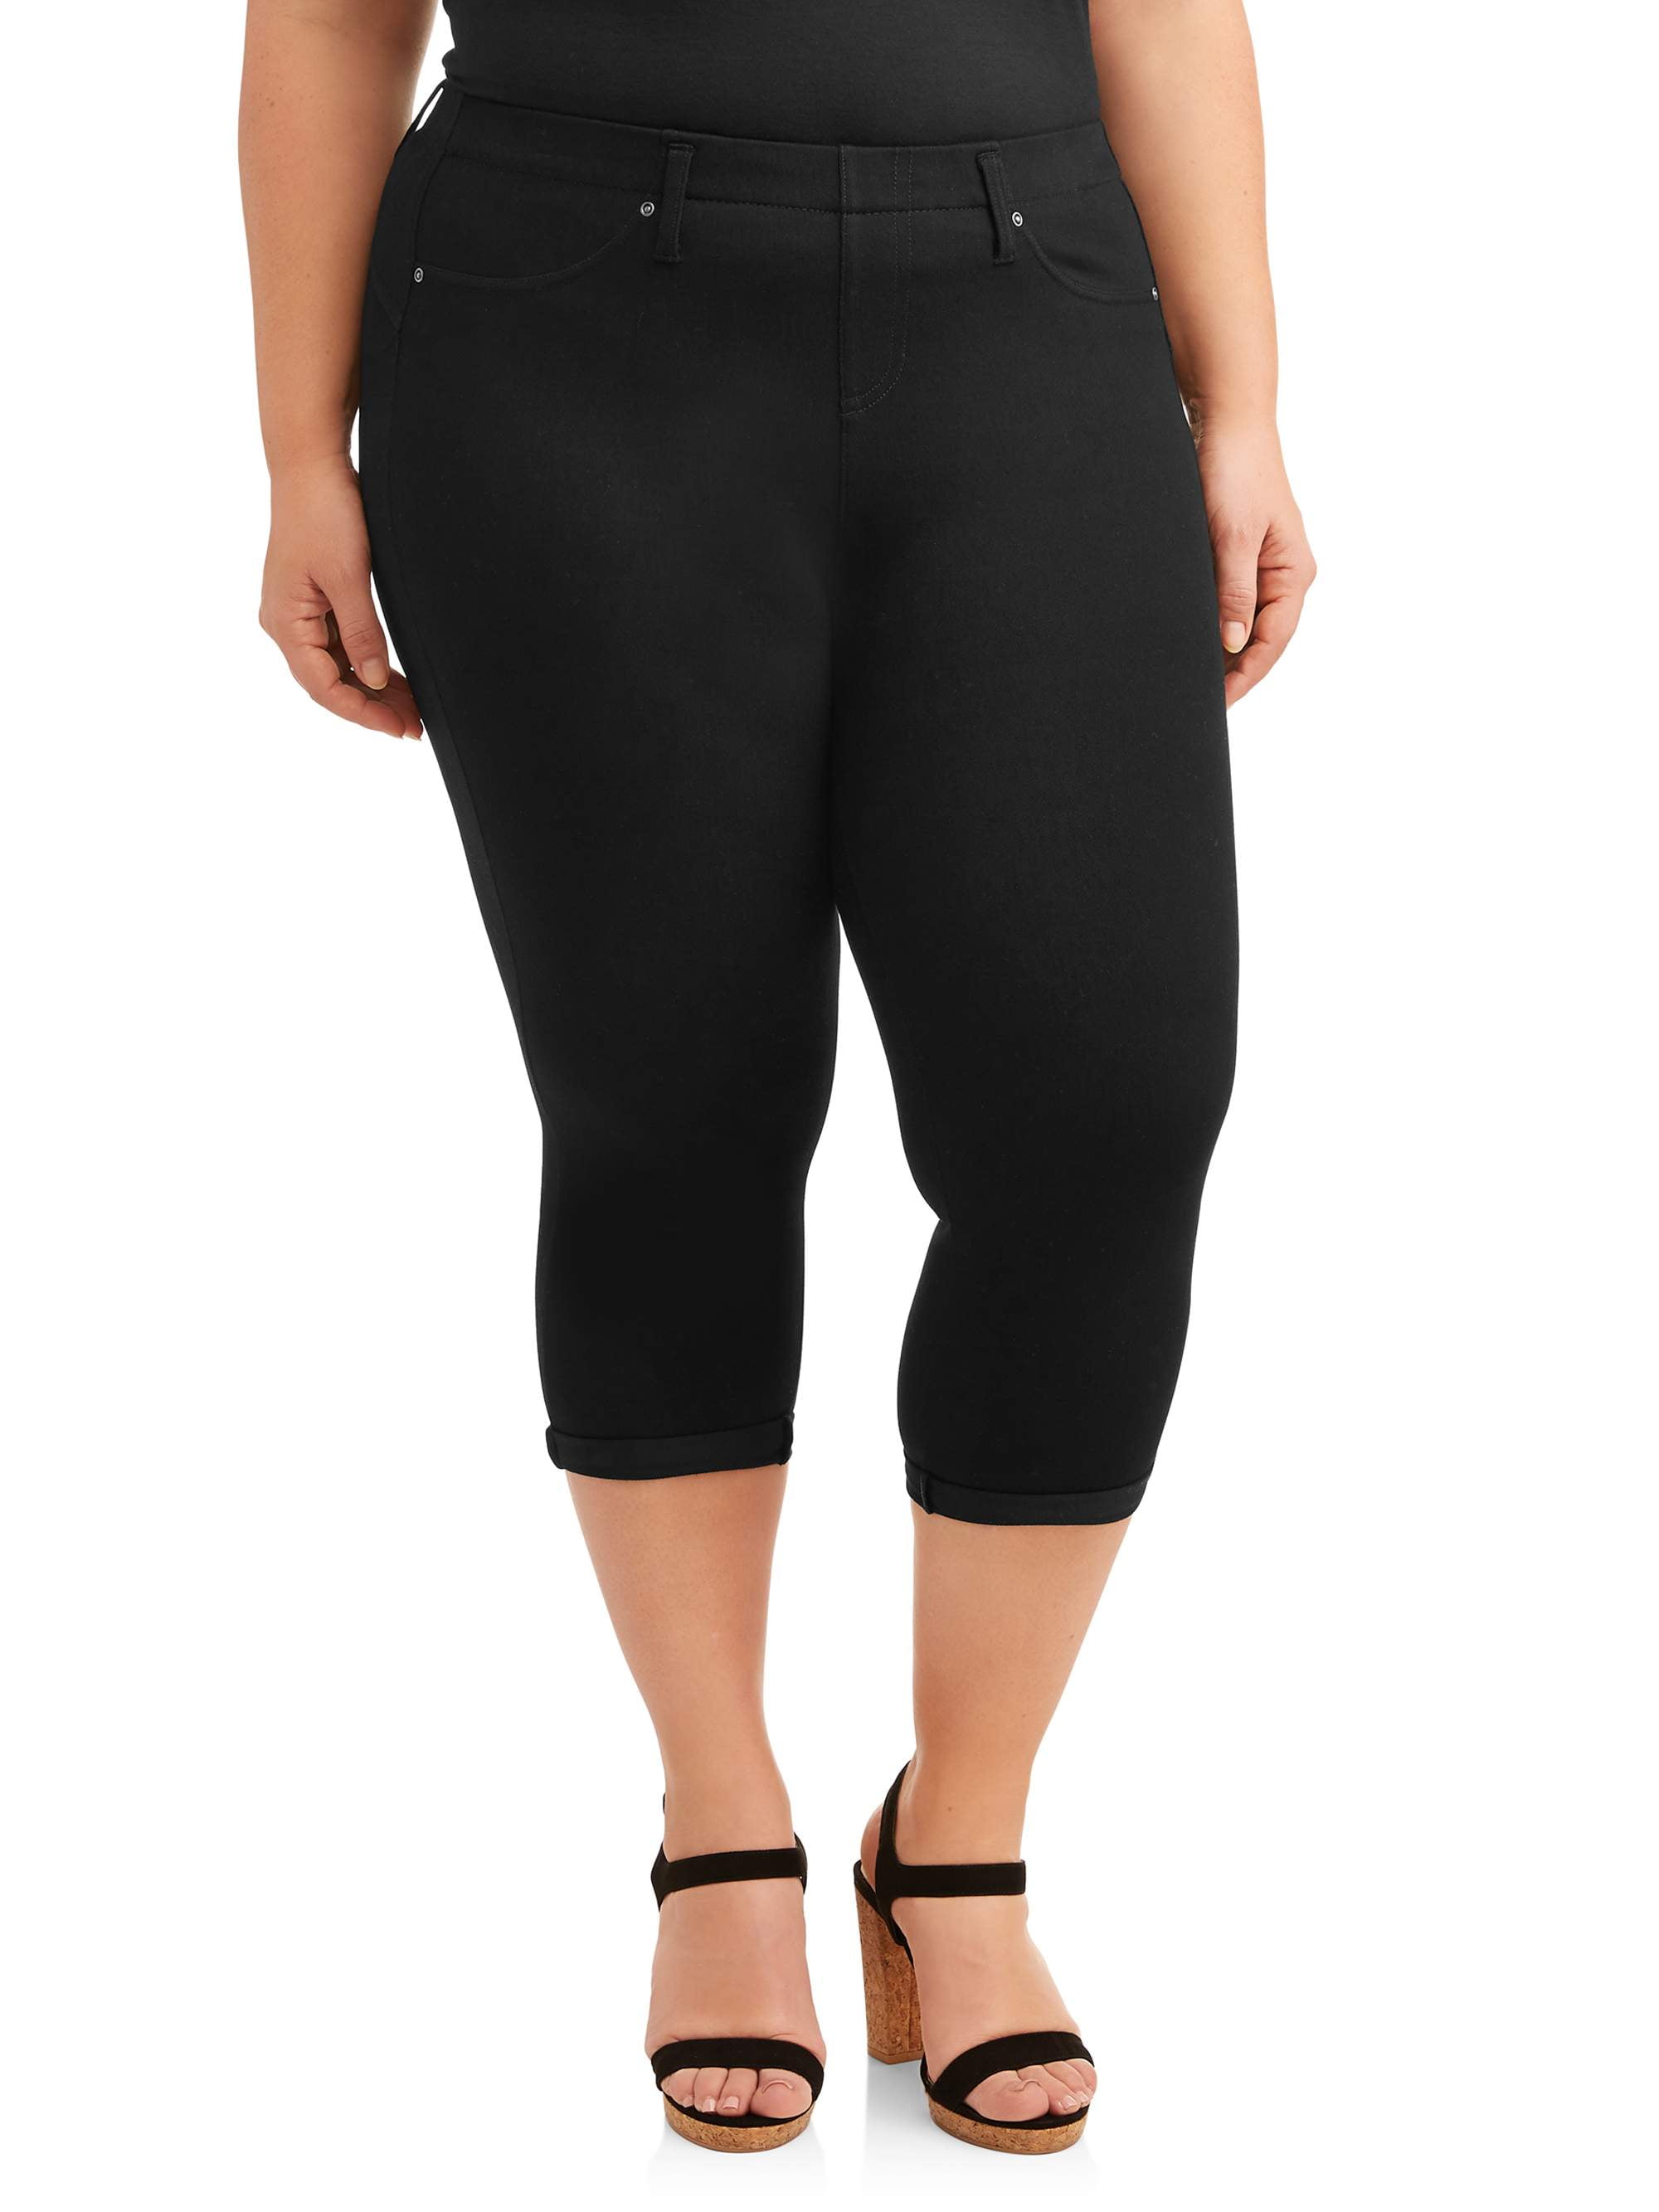 Terra & Sky Women's Plus Size Pull on 2 Pocket Stretch Jegging Capri 